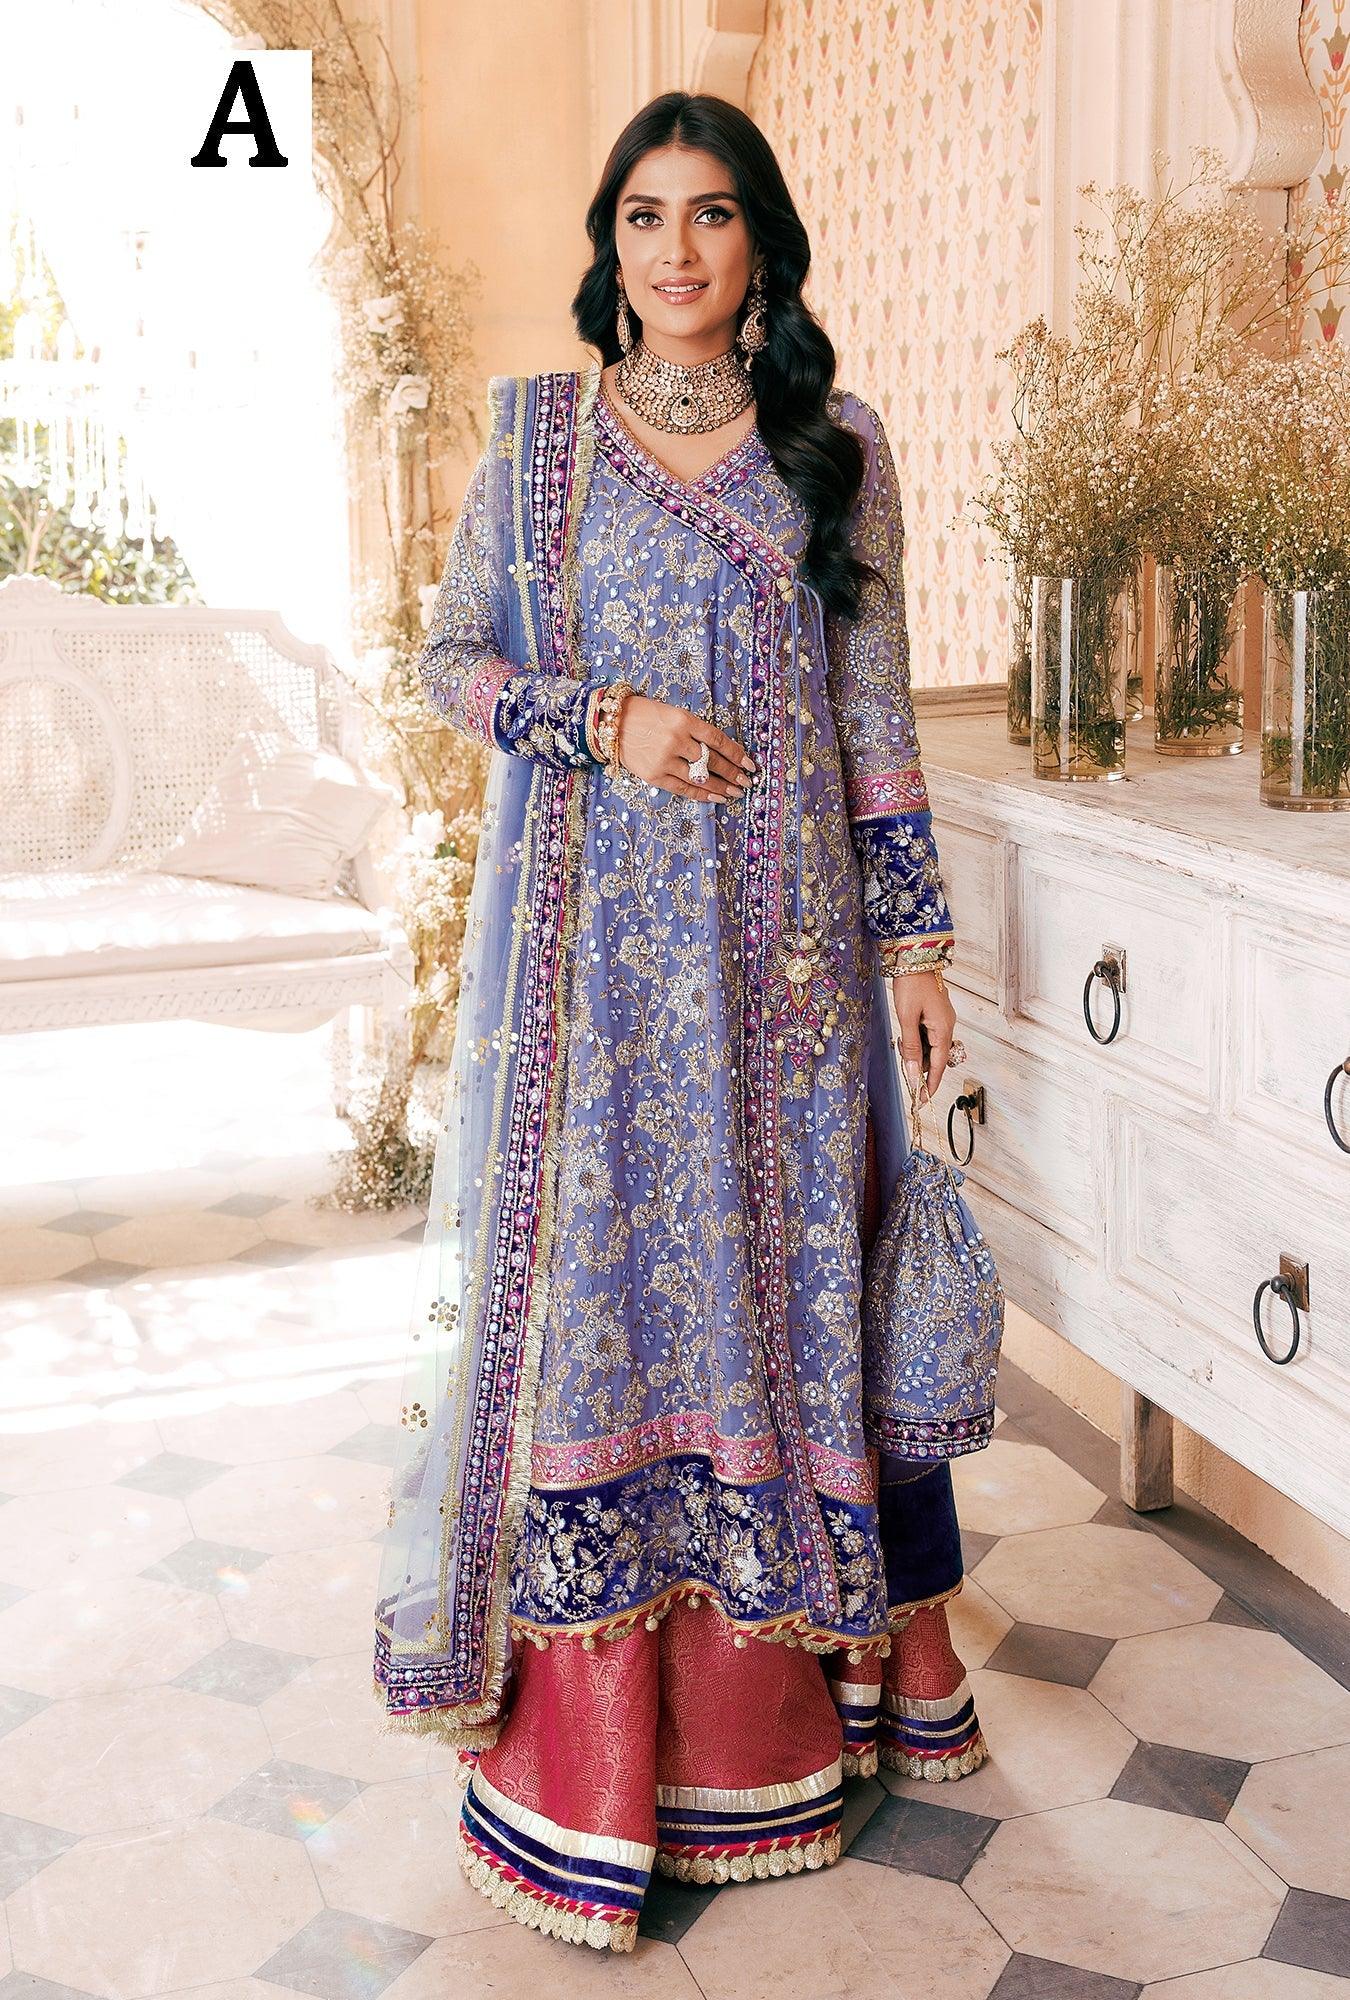 Sitareh 02 - Noor Wedding Collection 2022 - Sitareh 02 - Noor Wedding Collection 2022 - Shahana Collection